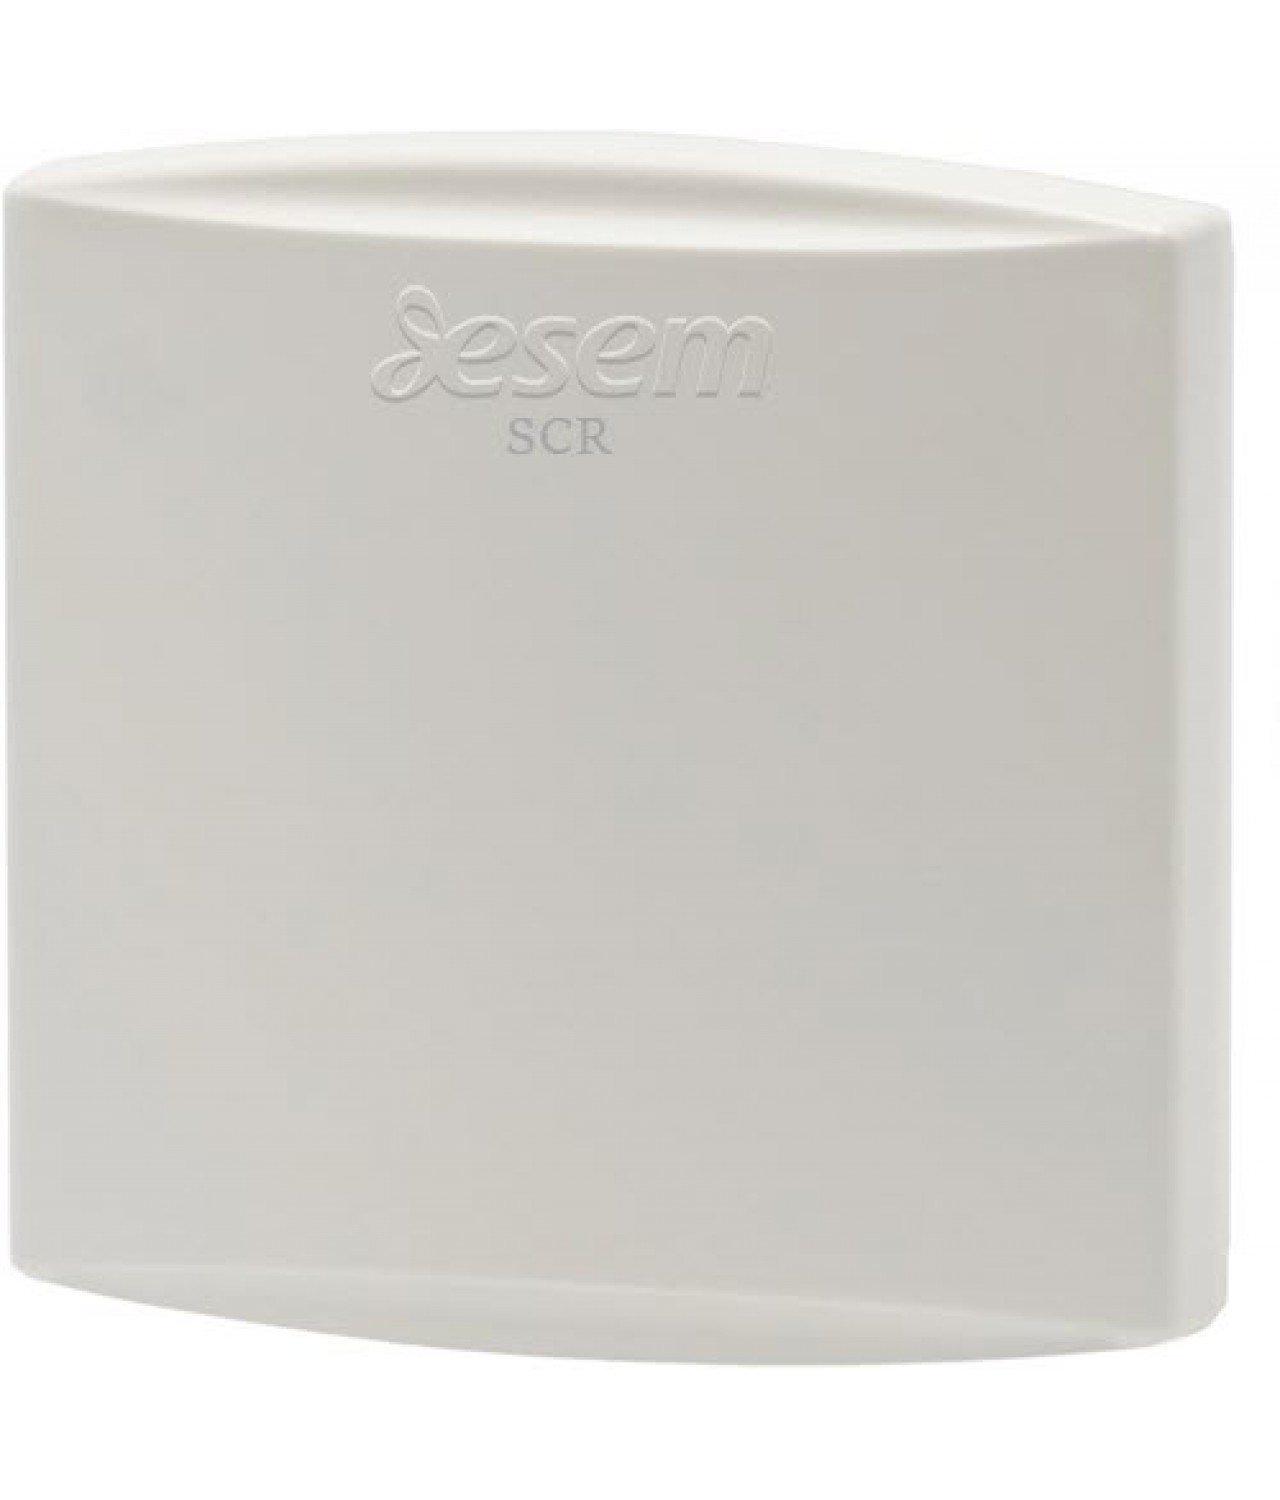 SCR - комнатный датчик температуры и CO2